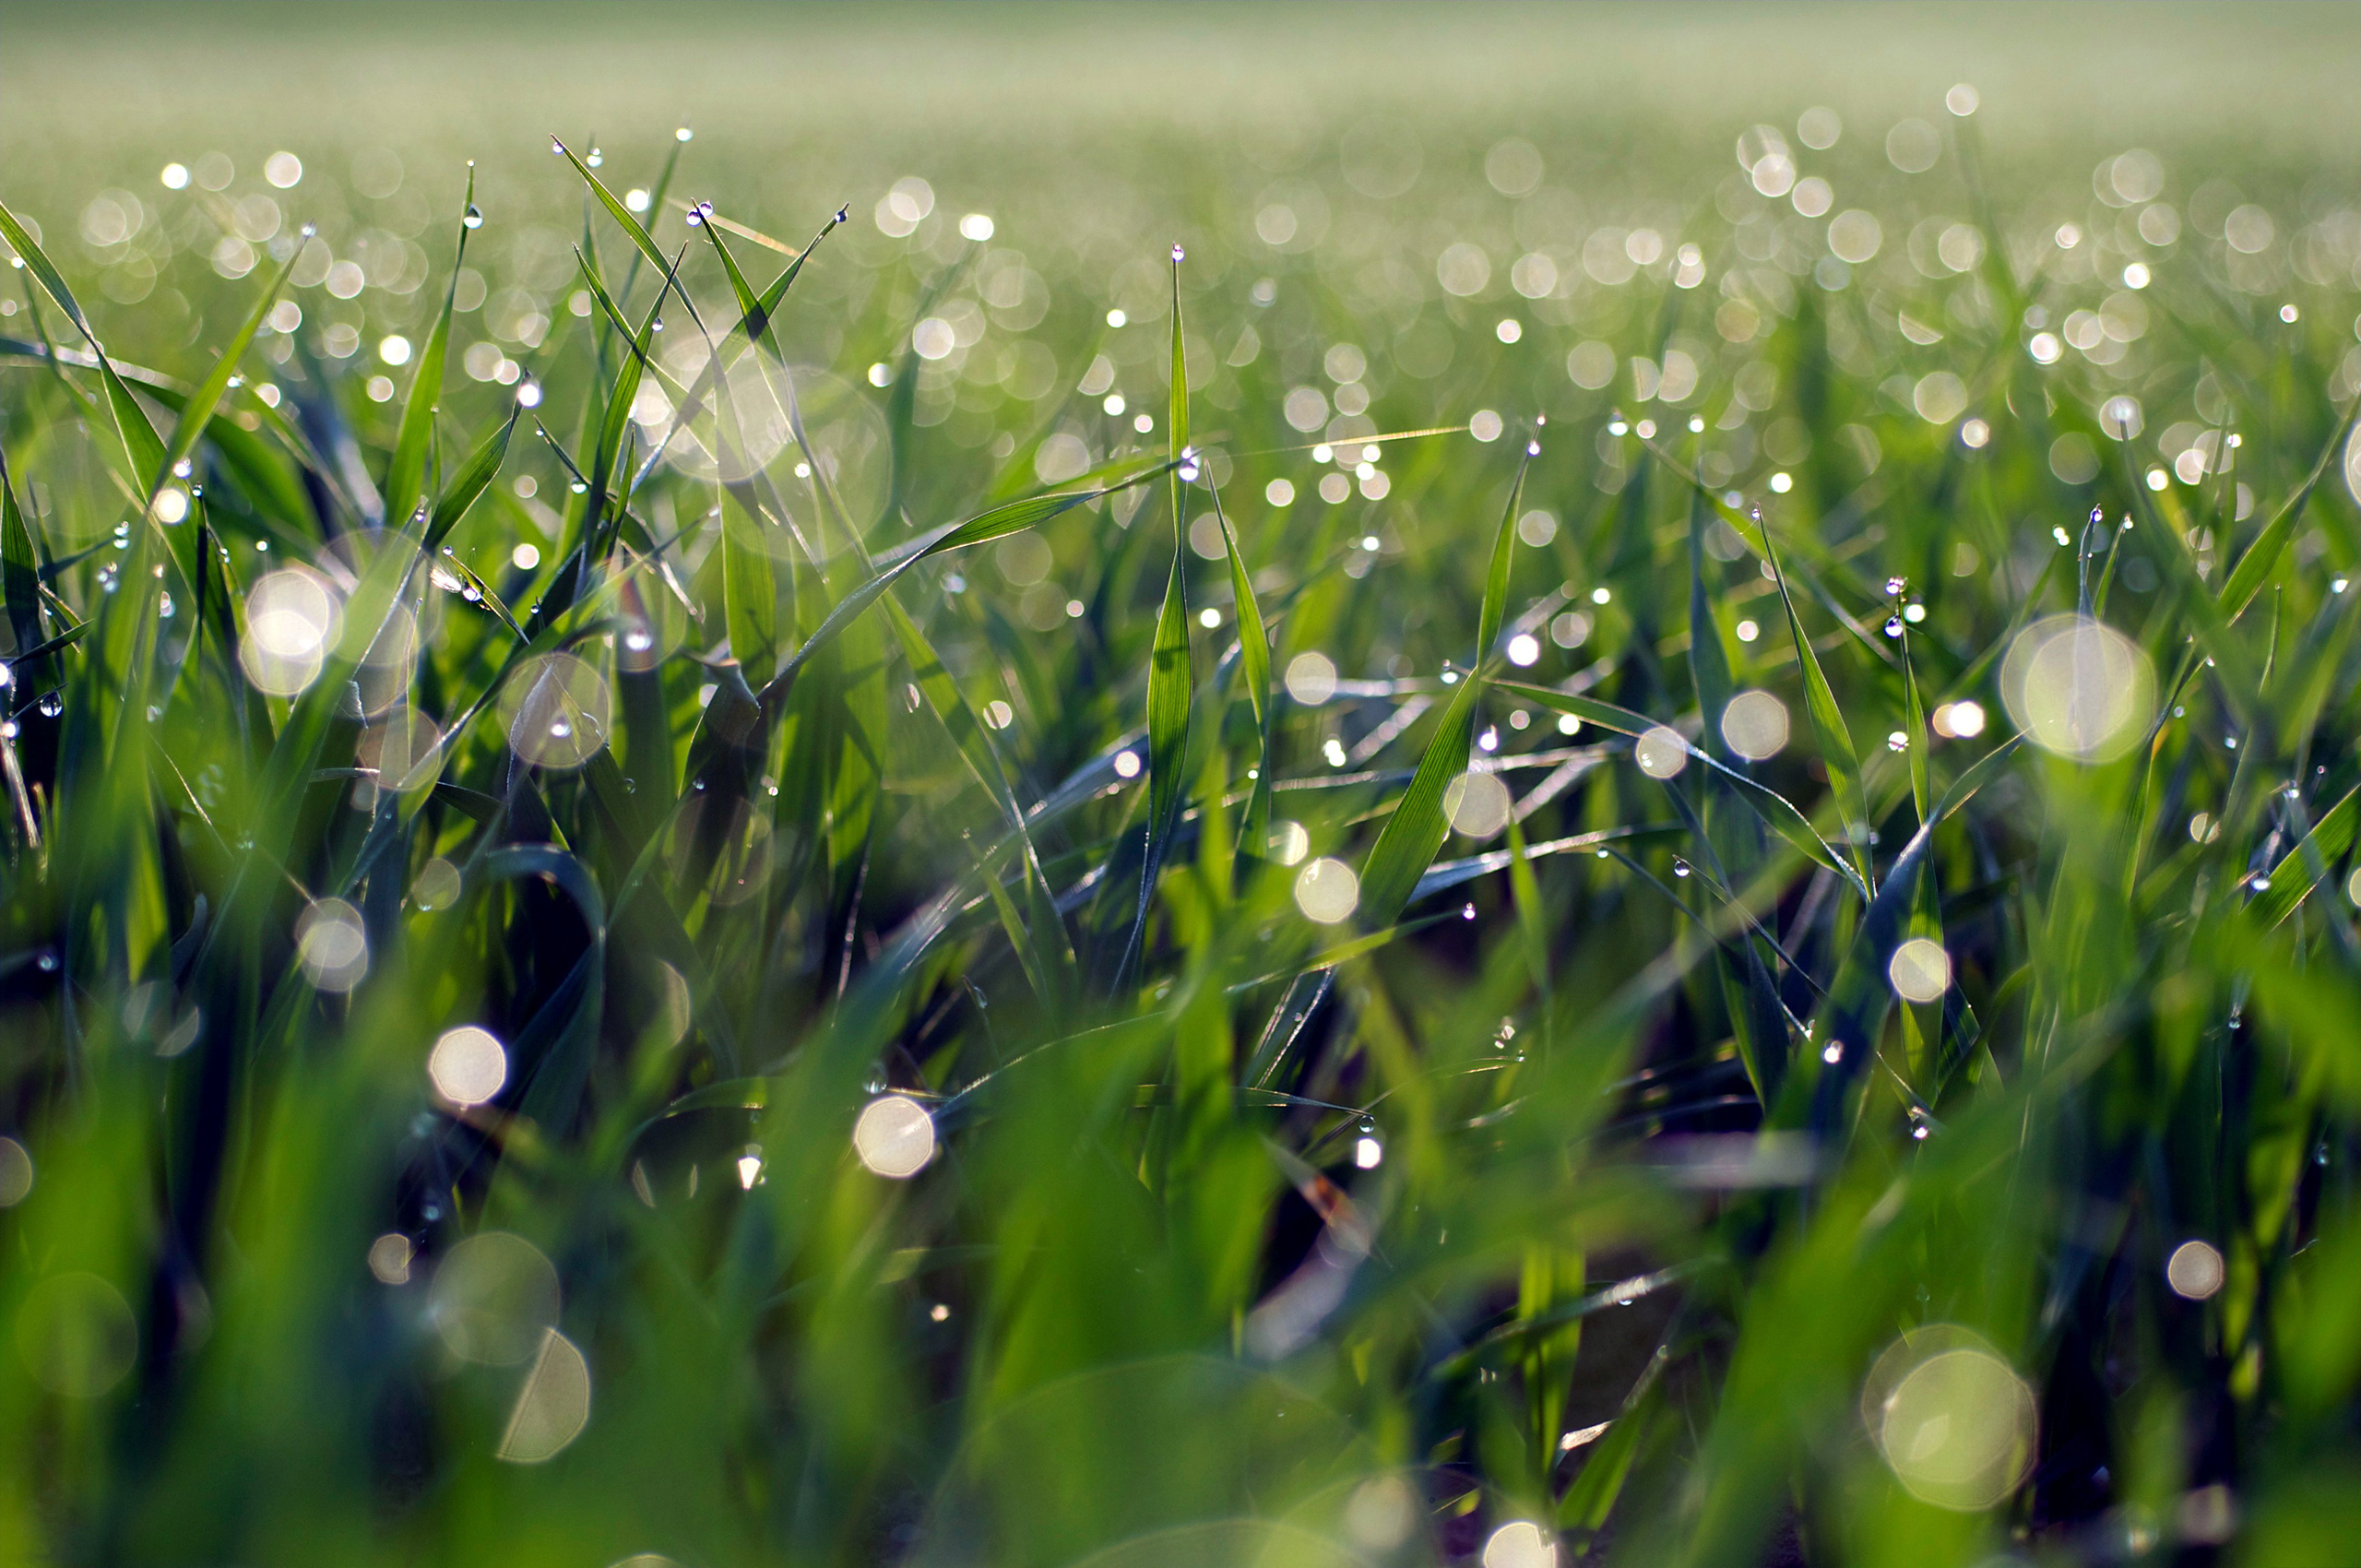 Имя утренняя роса. Роса на траве. Свежесть утра. Трава после дождя.